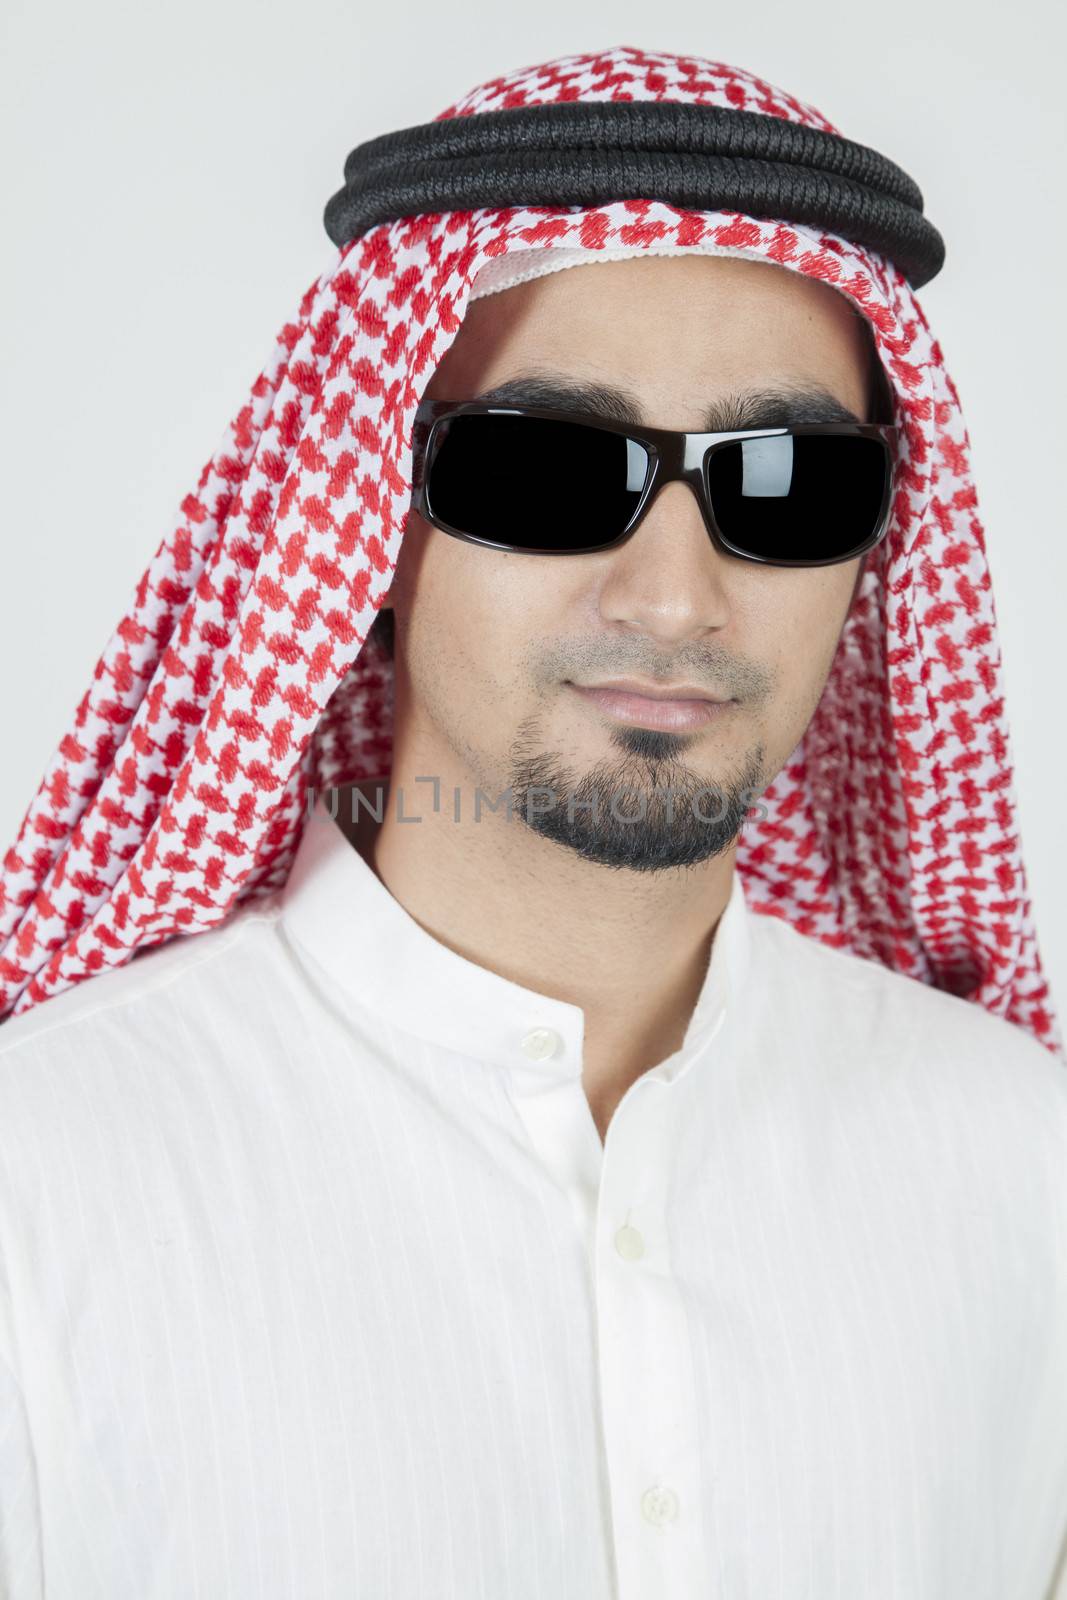 Young arab portrait wearing sun glasses by haiderazim